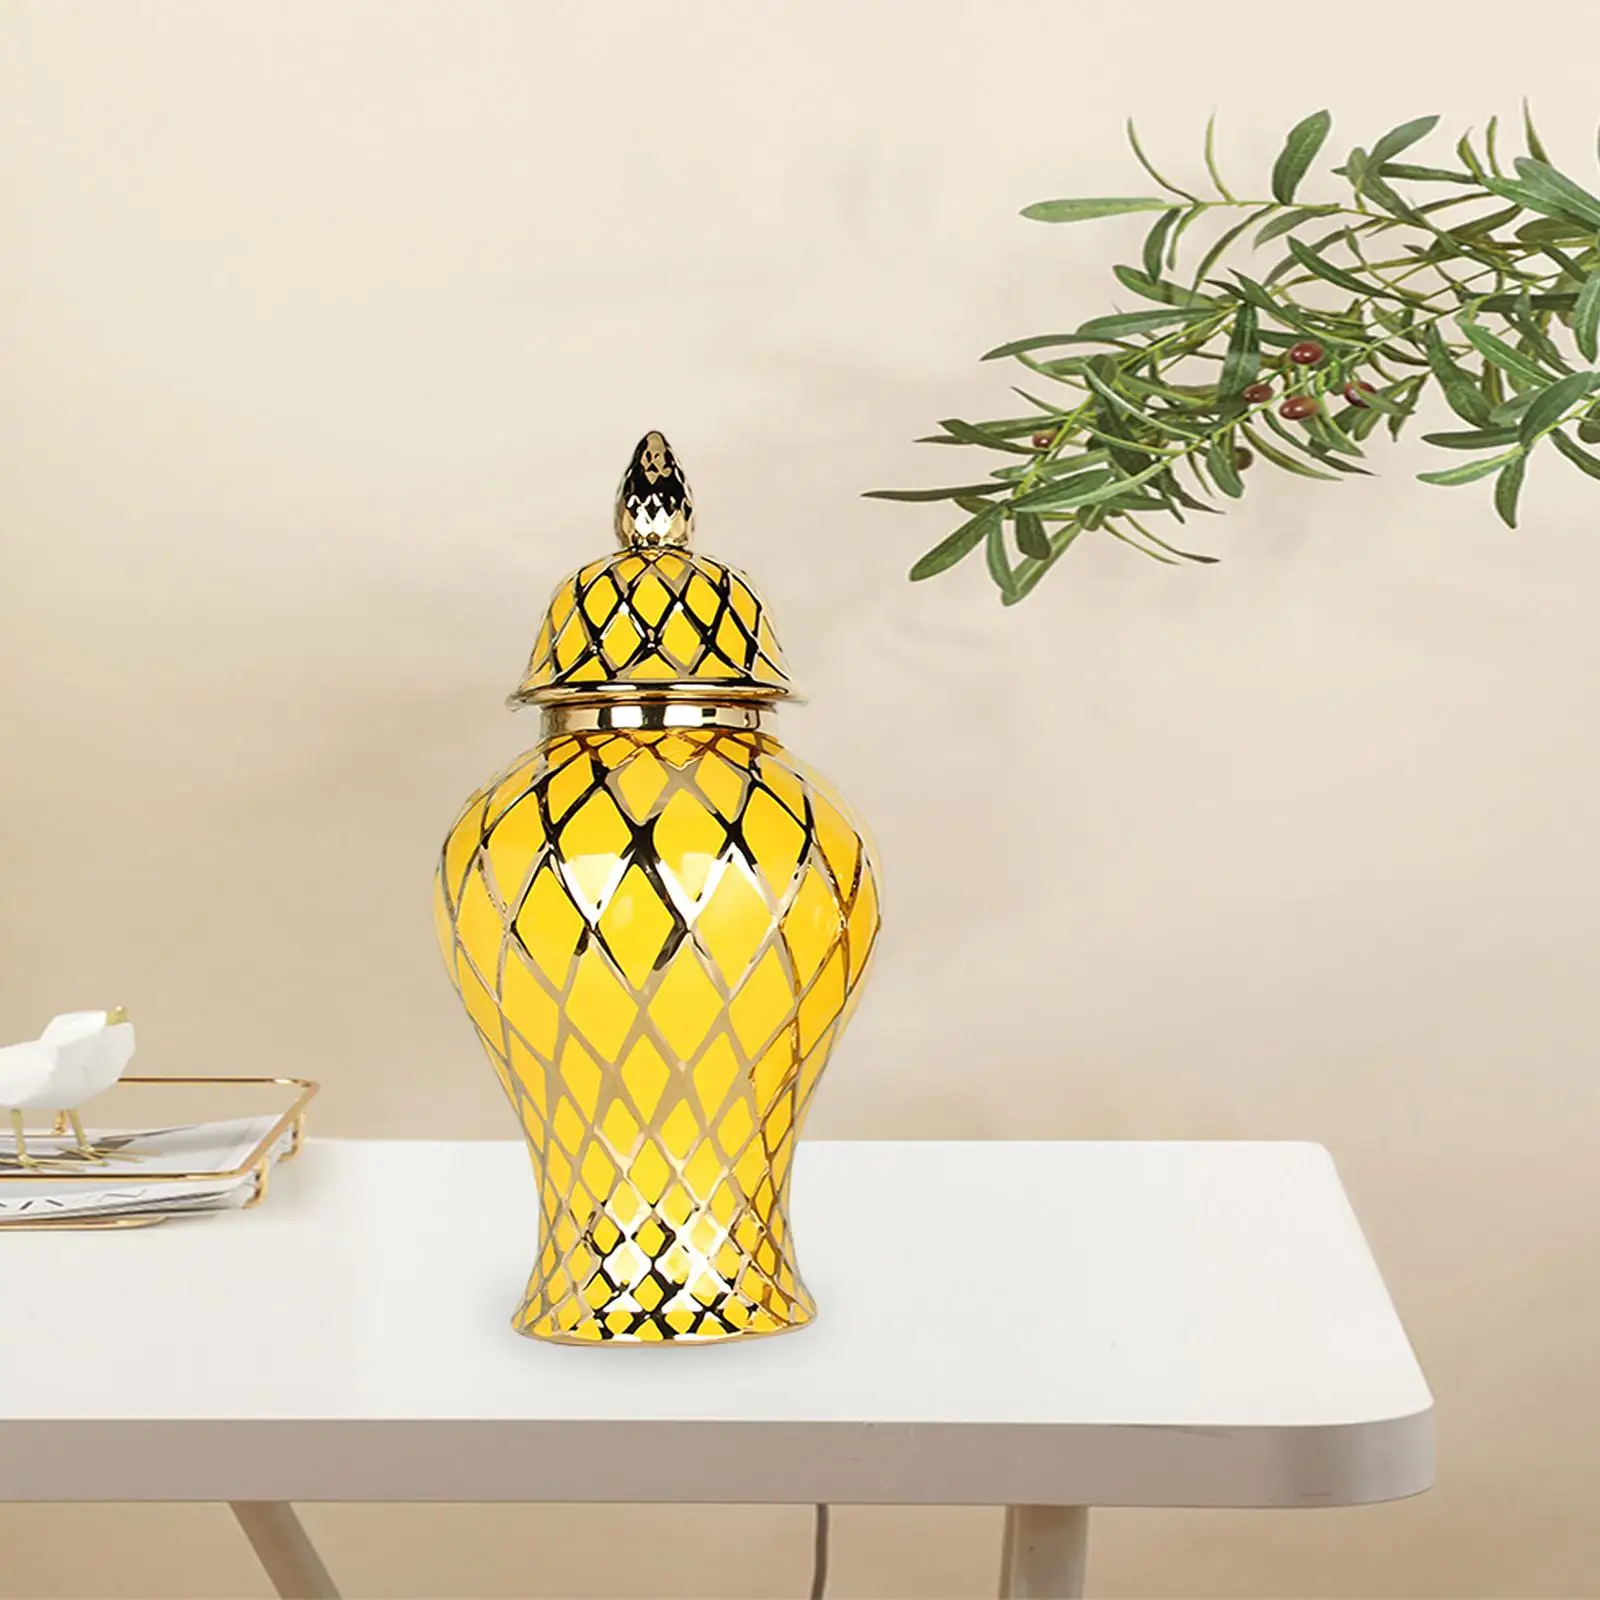 Ceramic Vase Table Centerpieces Decorative Accessories Porcelain Ginger Jar for Storage Tank Party Livingroom Office Bedroom